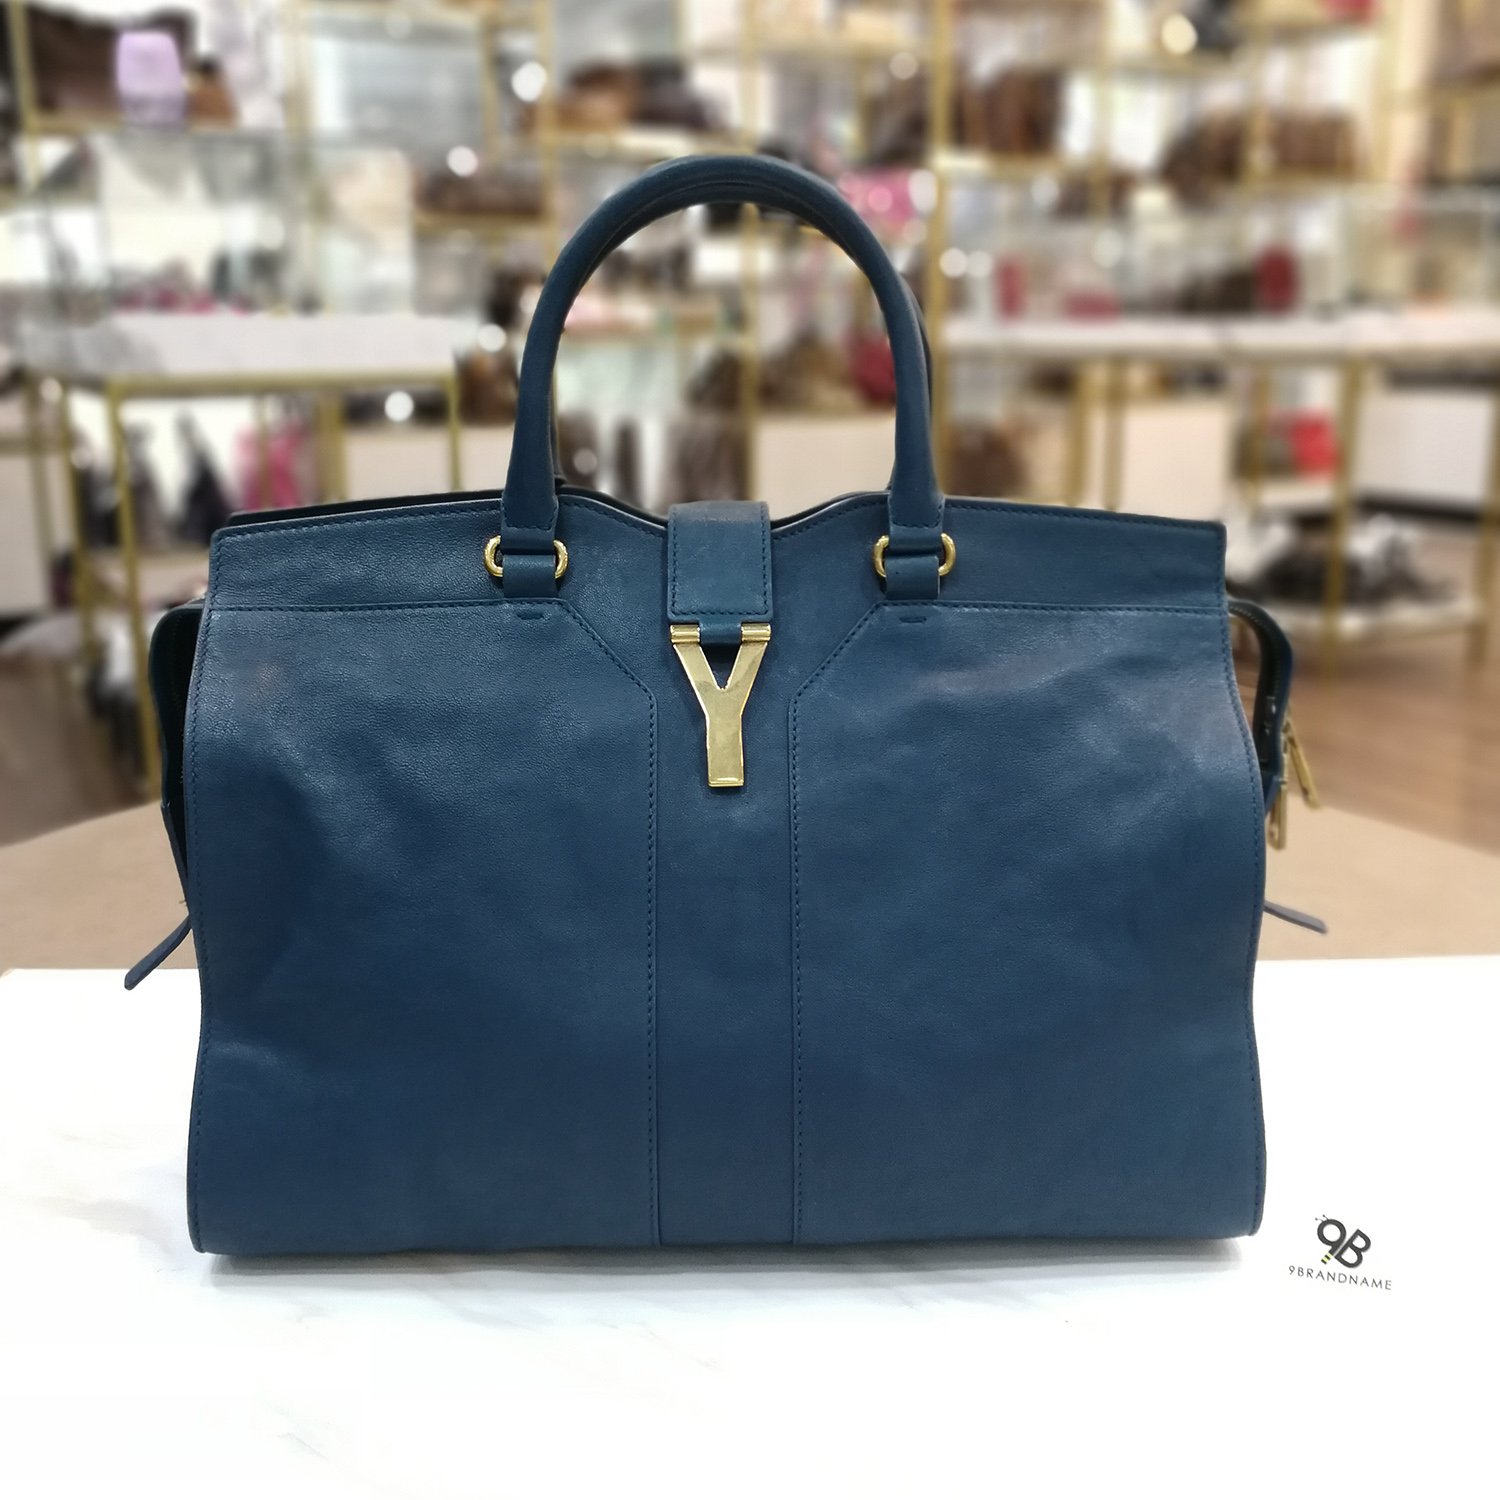 Used - Yves Saint​ Laurent​ Cabas​ Chyc​ Hand​ Bag​ Blue​ Laurent​ Large​  Size GHW​ - 9brandname